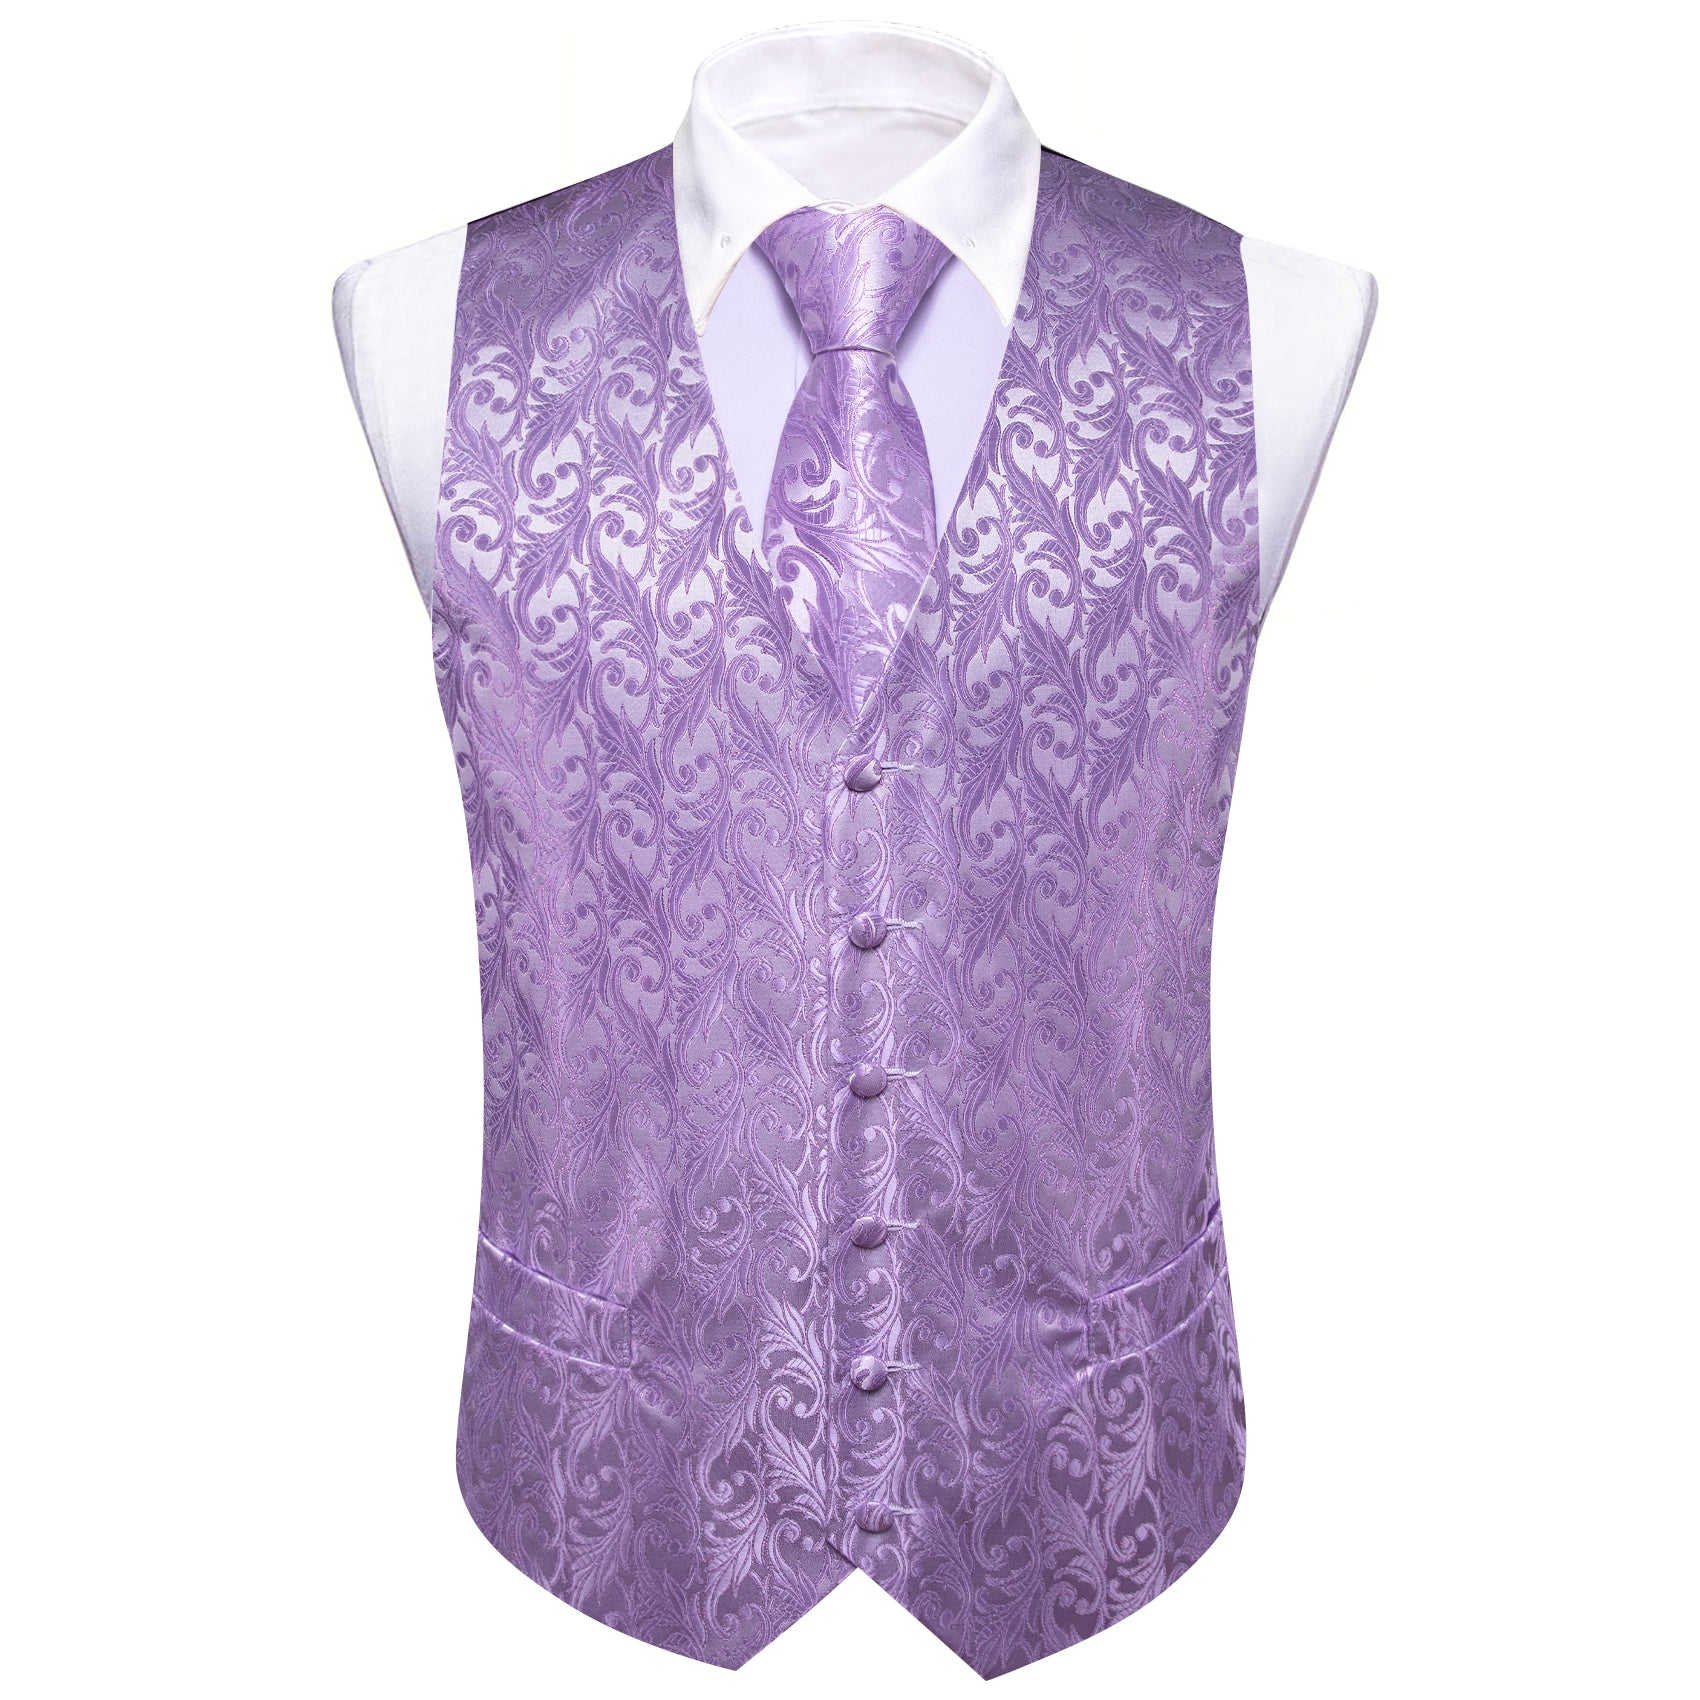 dark purple vest and tie